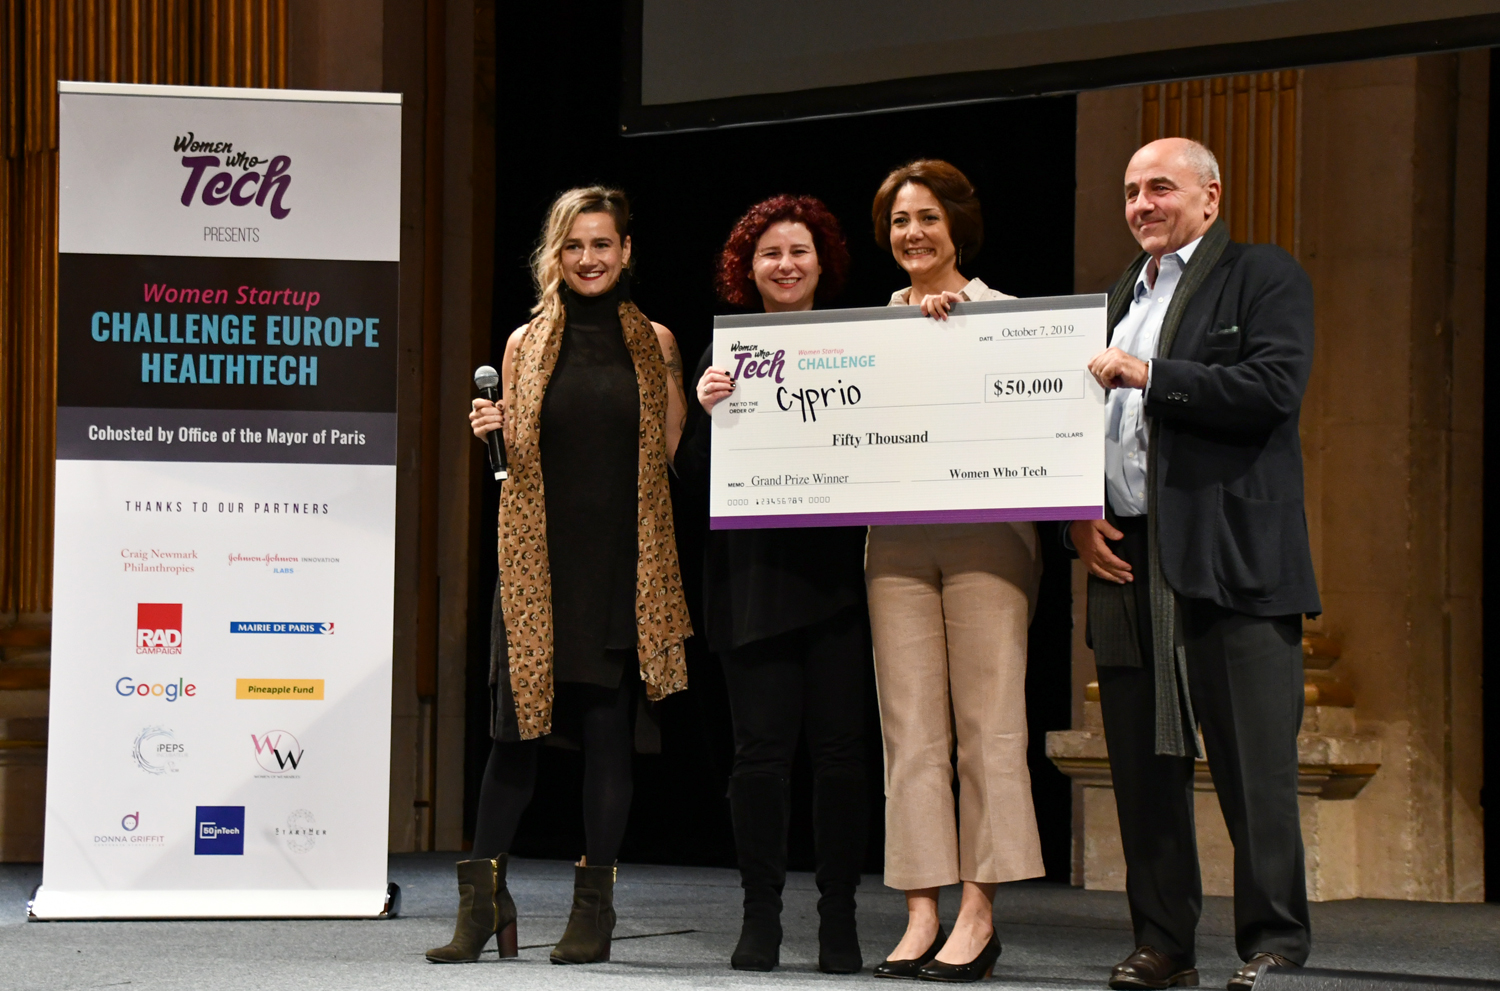 Cyprio won the Women Startup Challenge Europe Healthtech